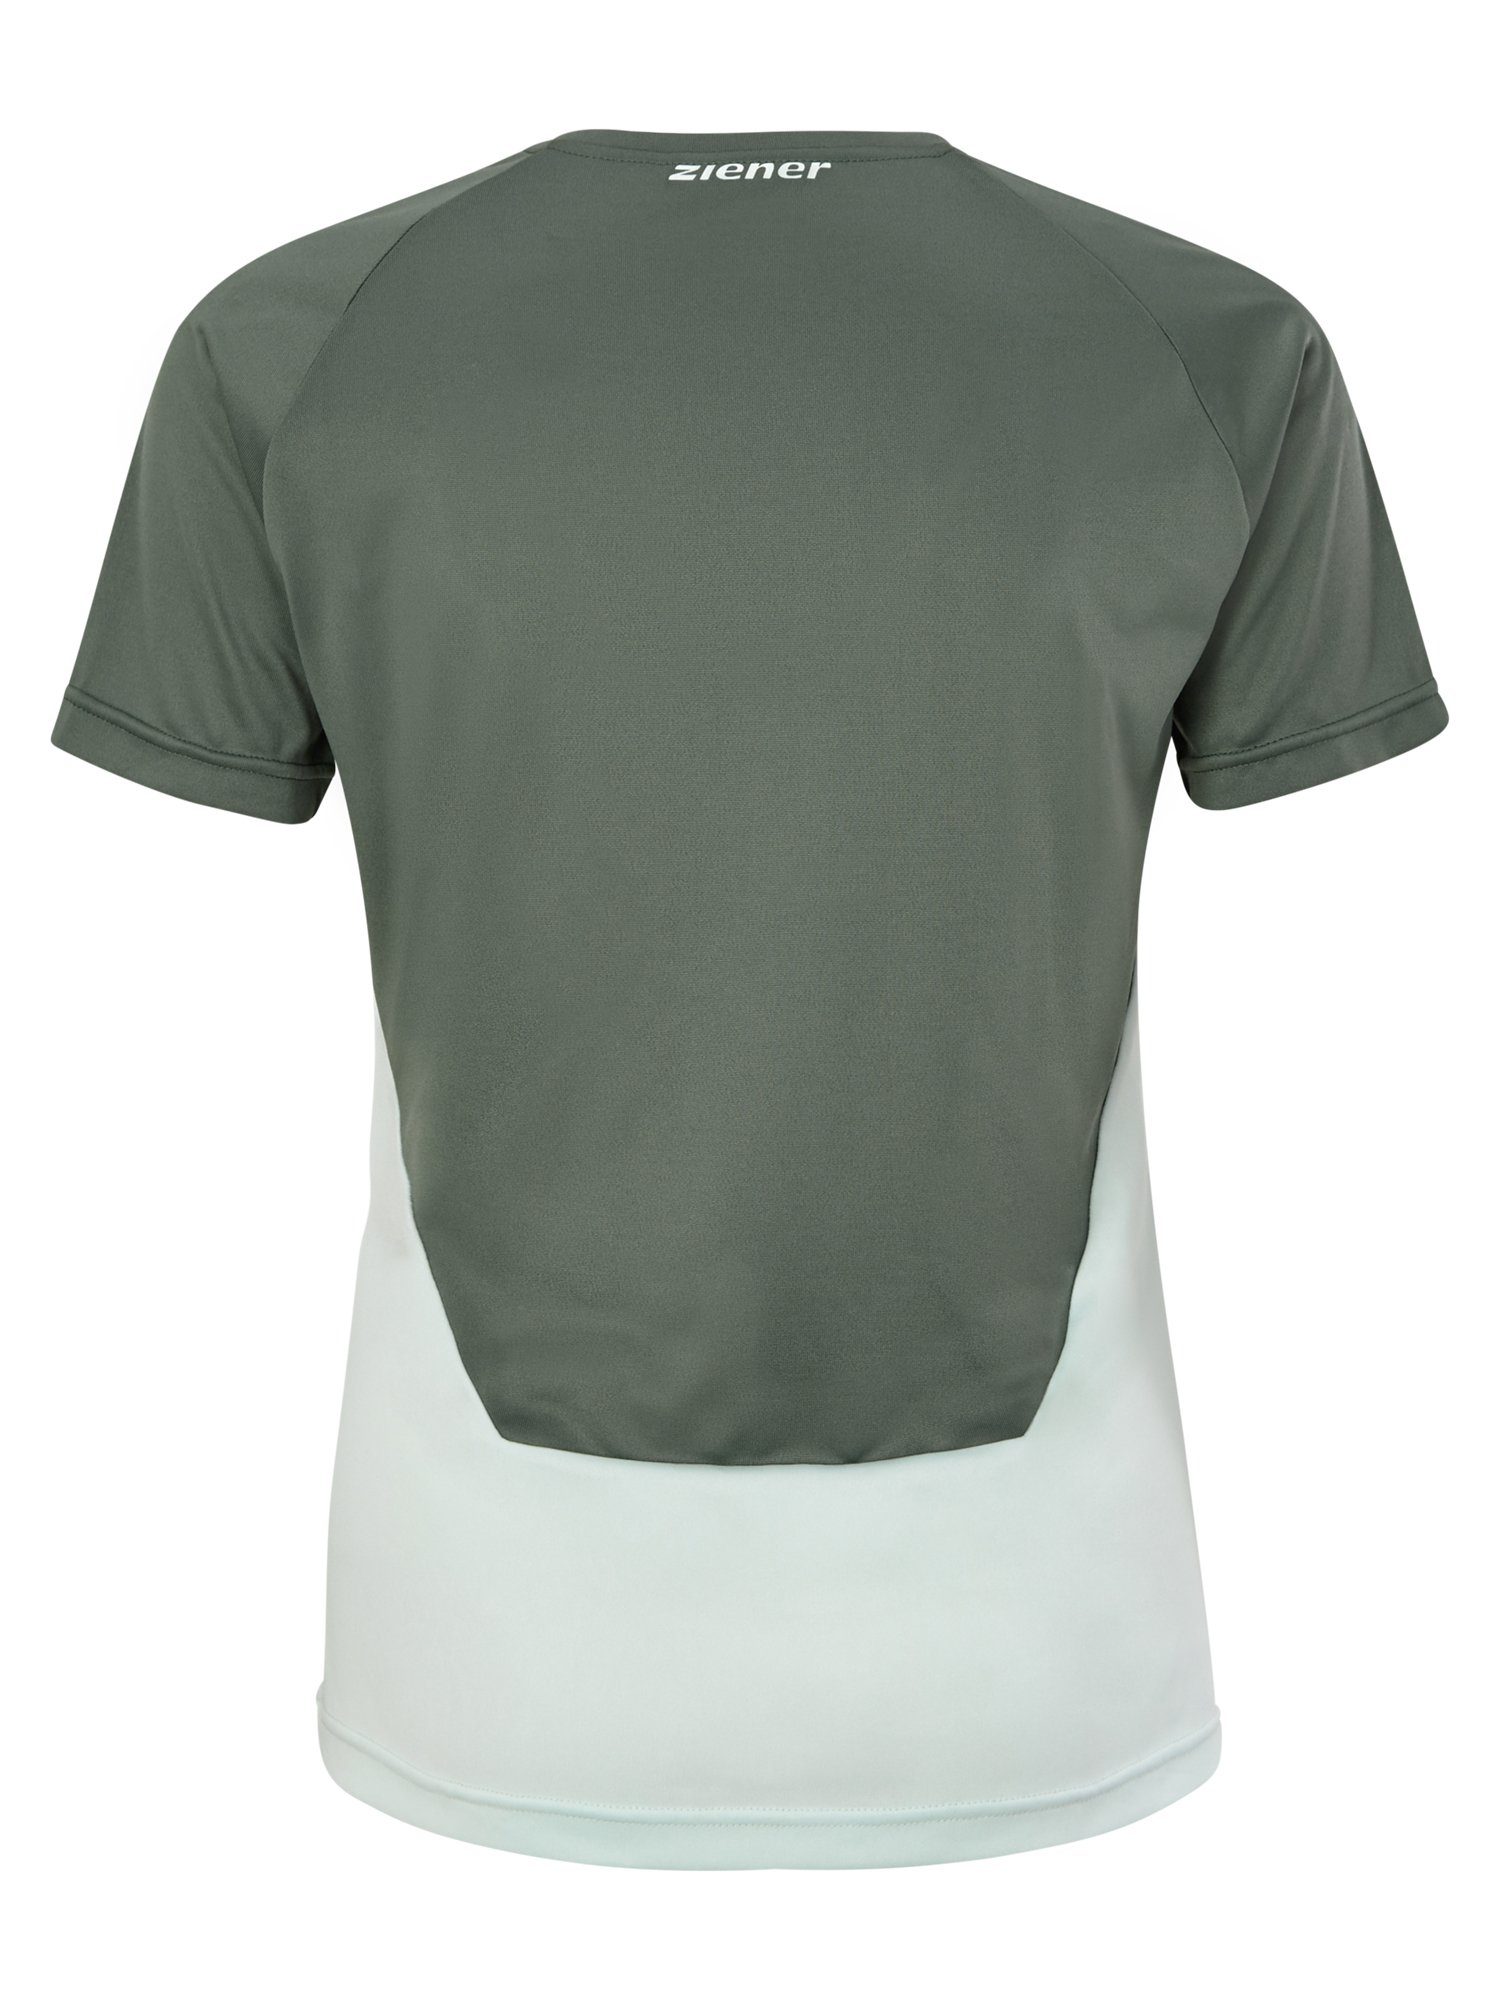 Ziener T-Shirt NABUCA olivgrün